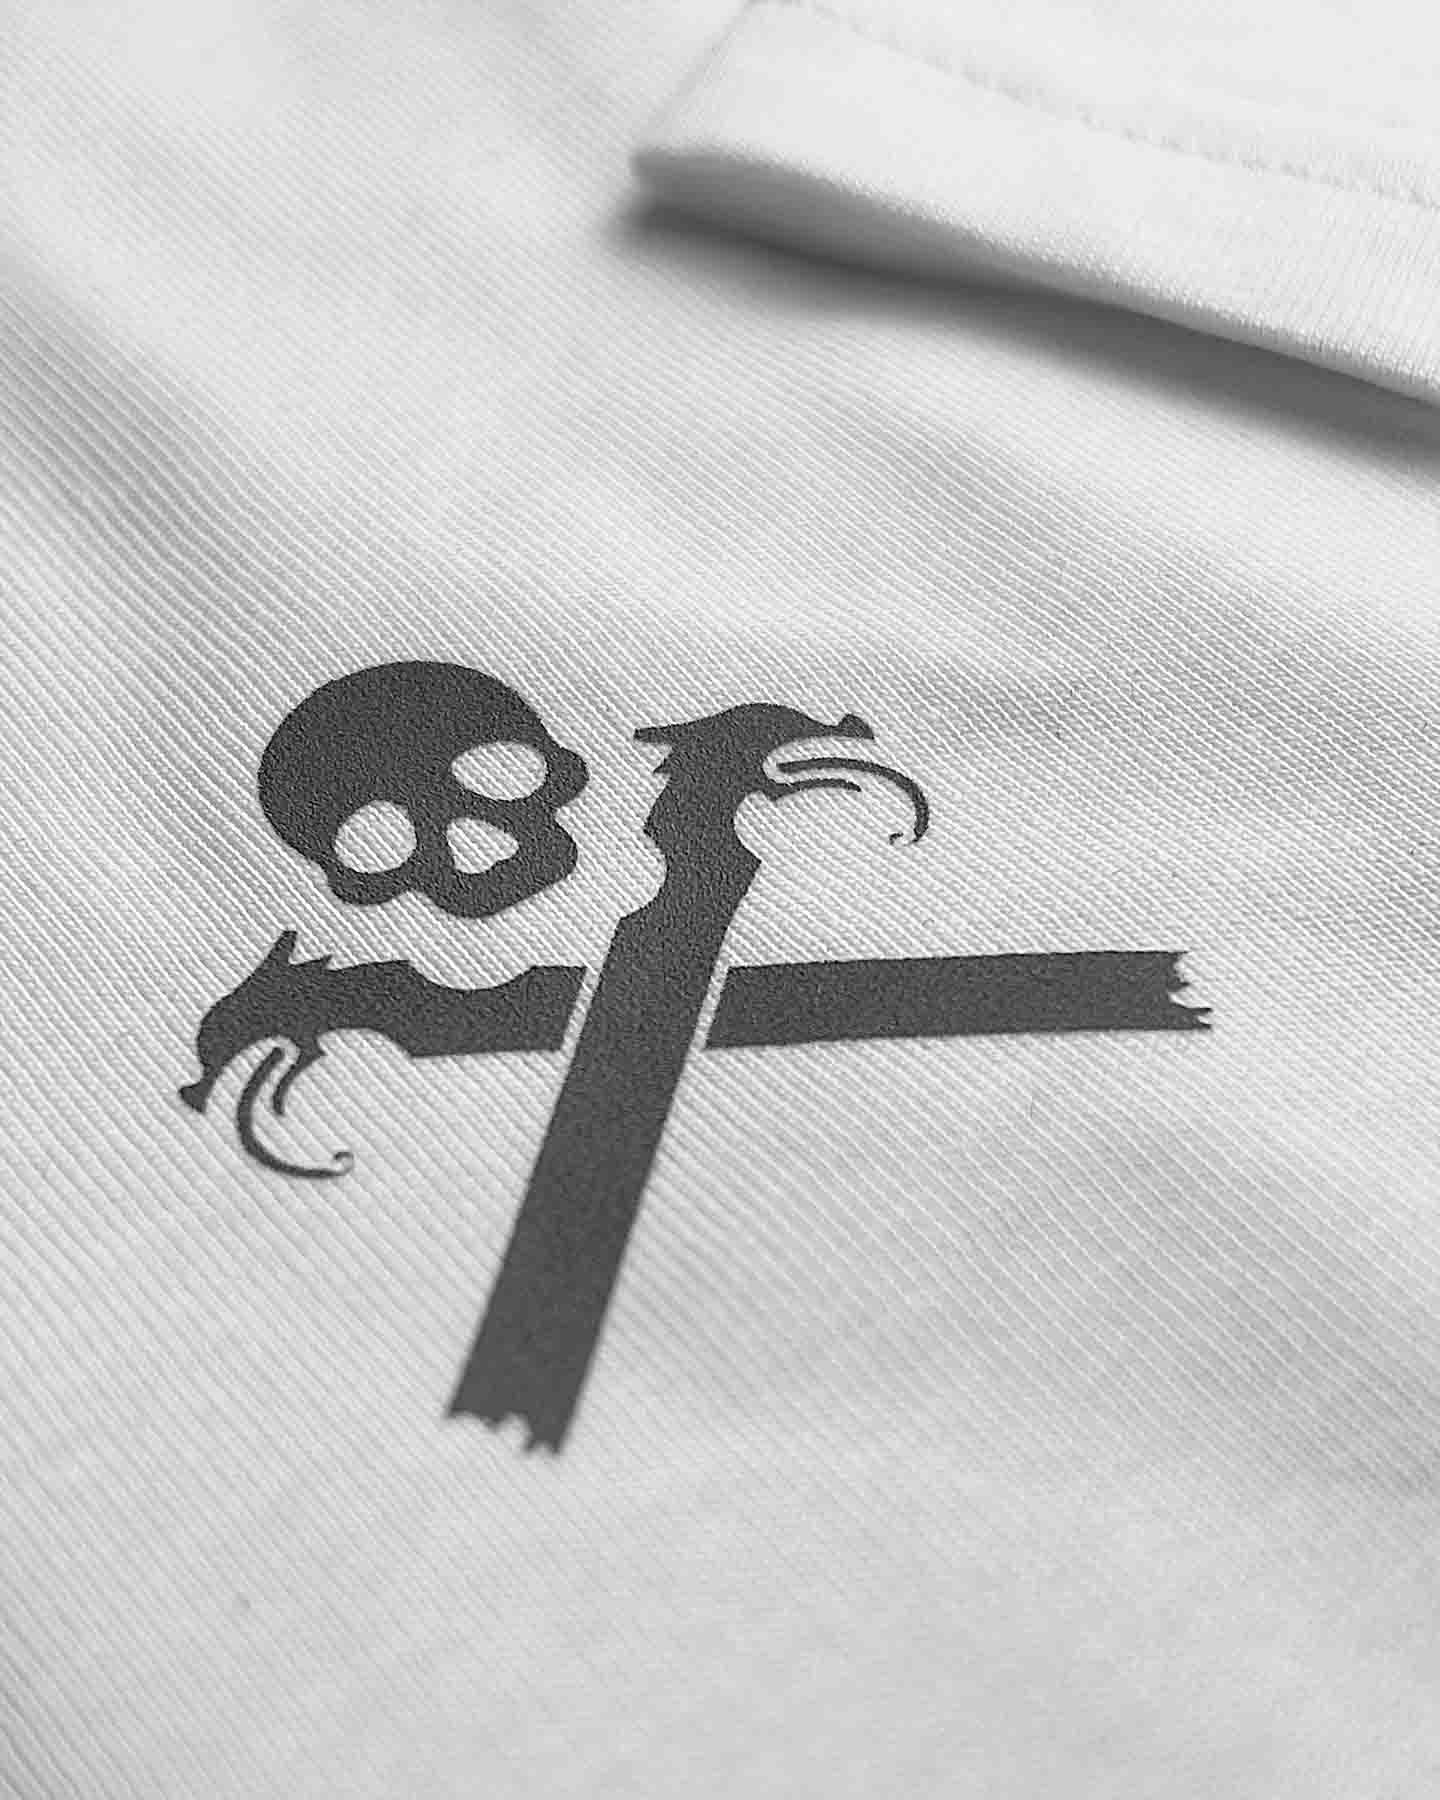 Macro shot of the skull logo on white Essentials T-Shirt, highlighting the minimalist design